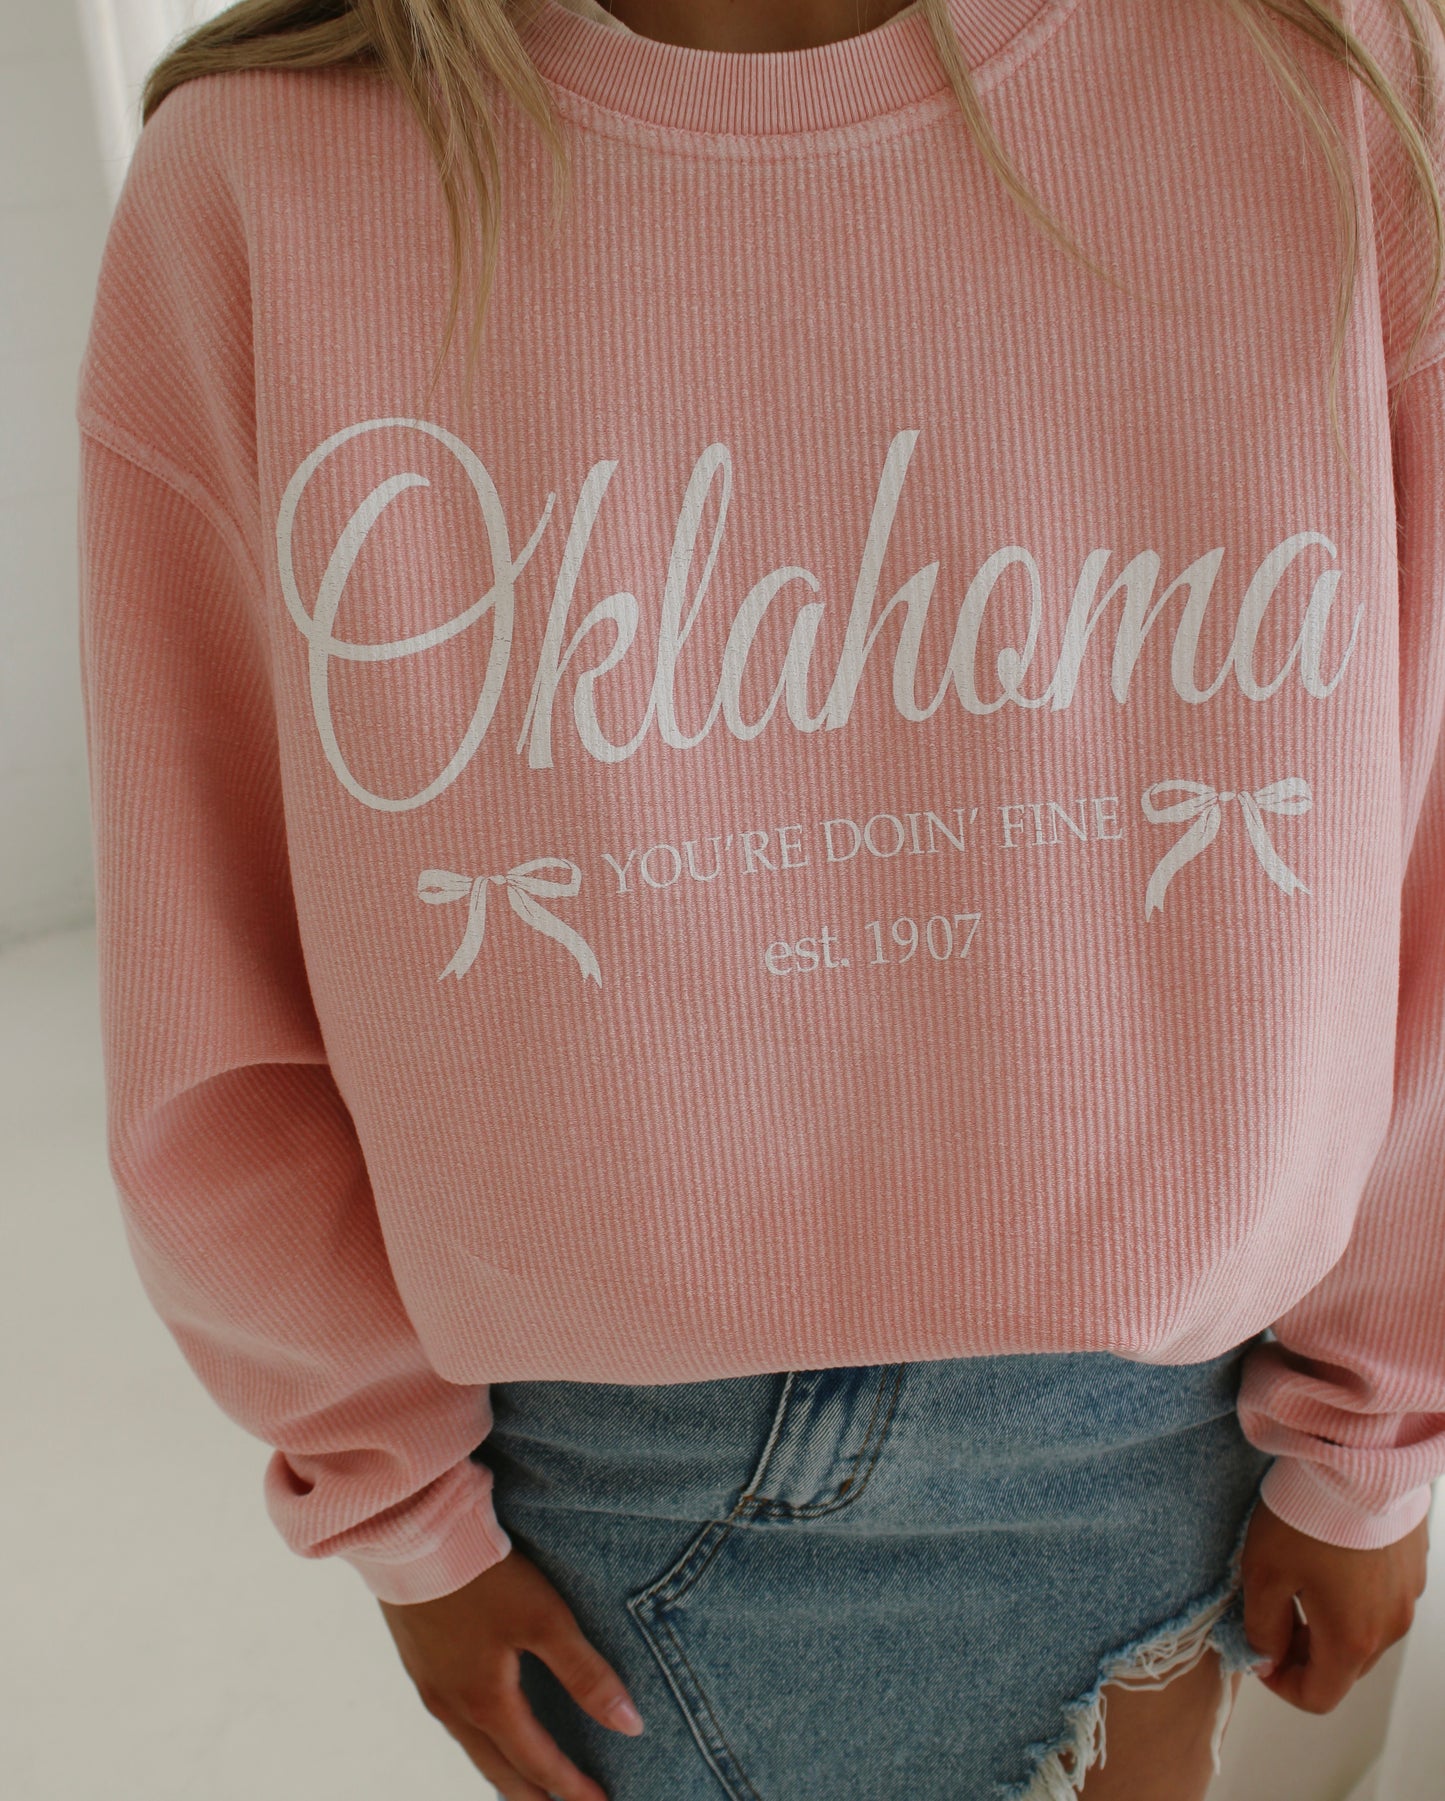 pink oklahoma sweatshirt